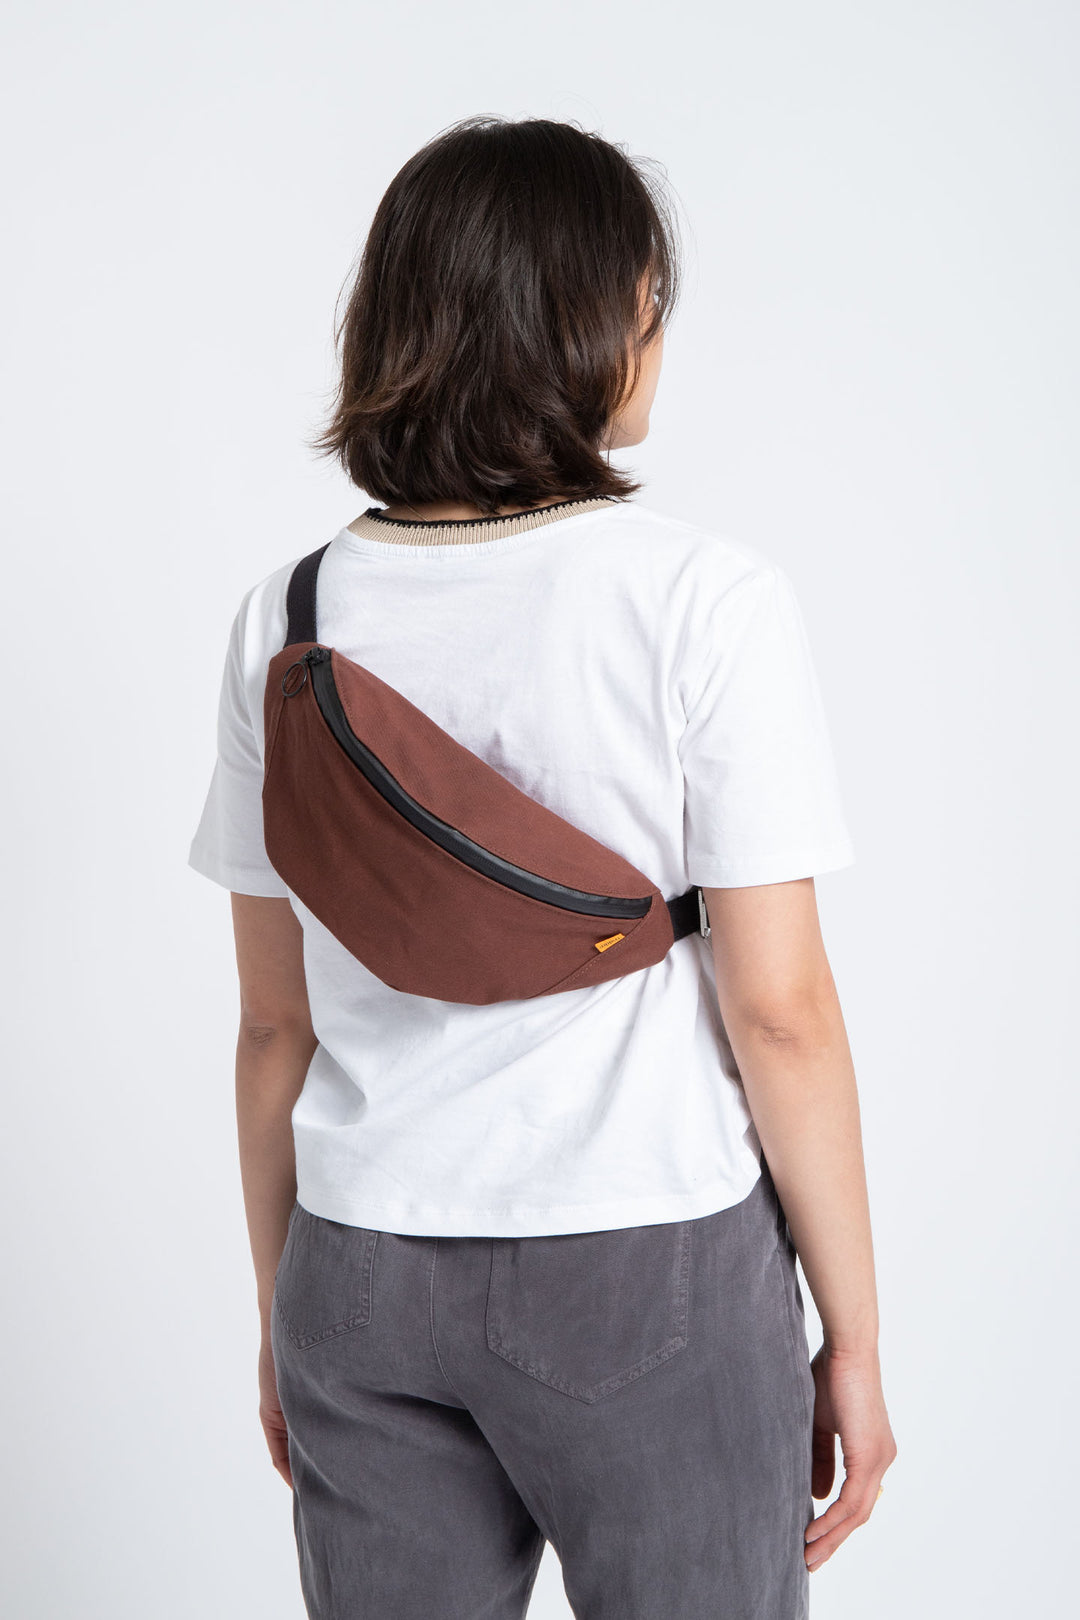 Leather Fanny Pack/ Waist Bag - Explorer [Brown]